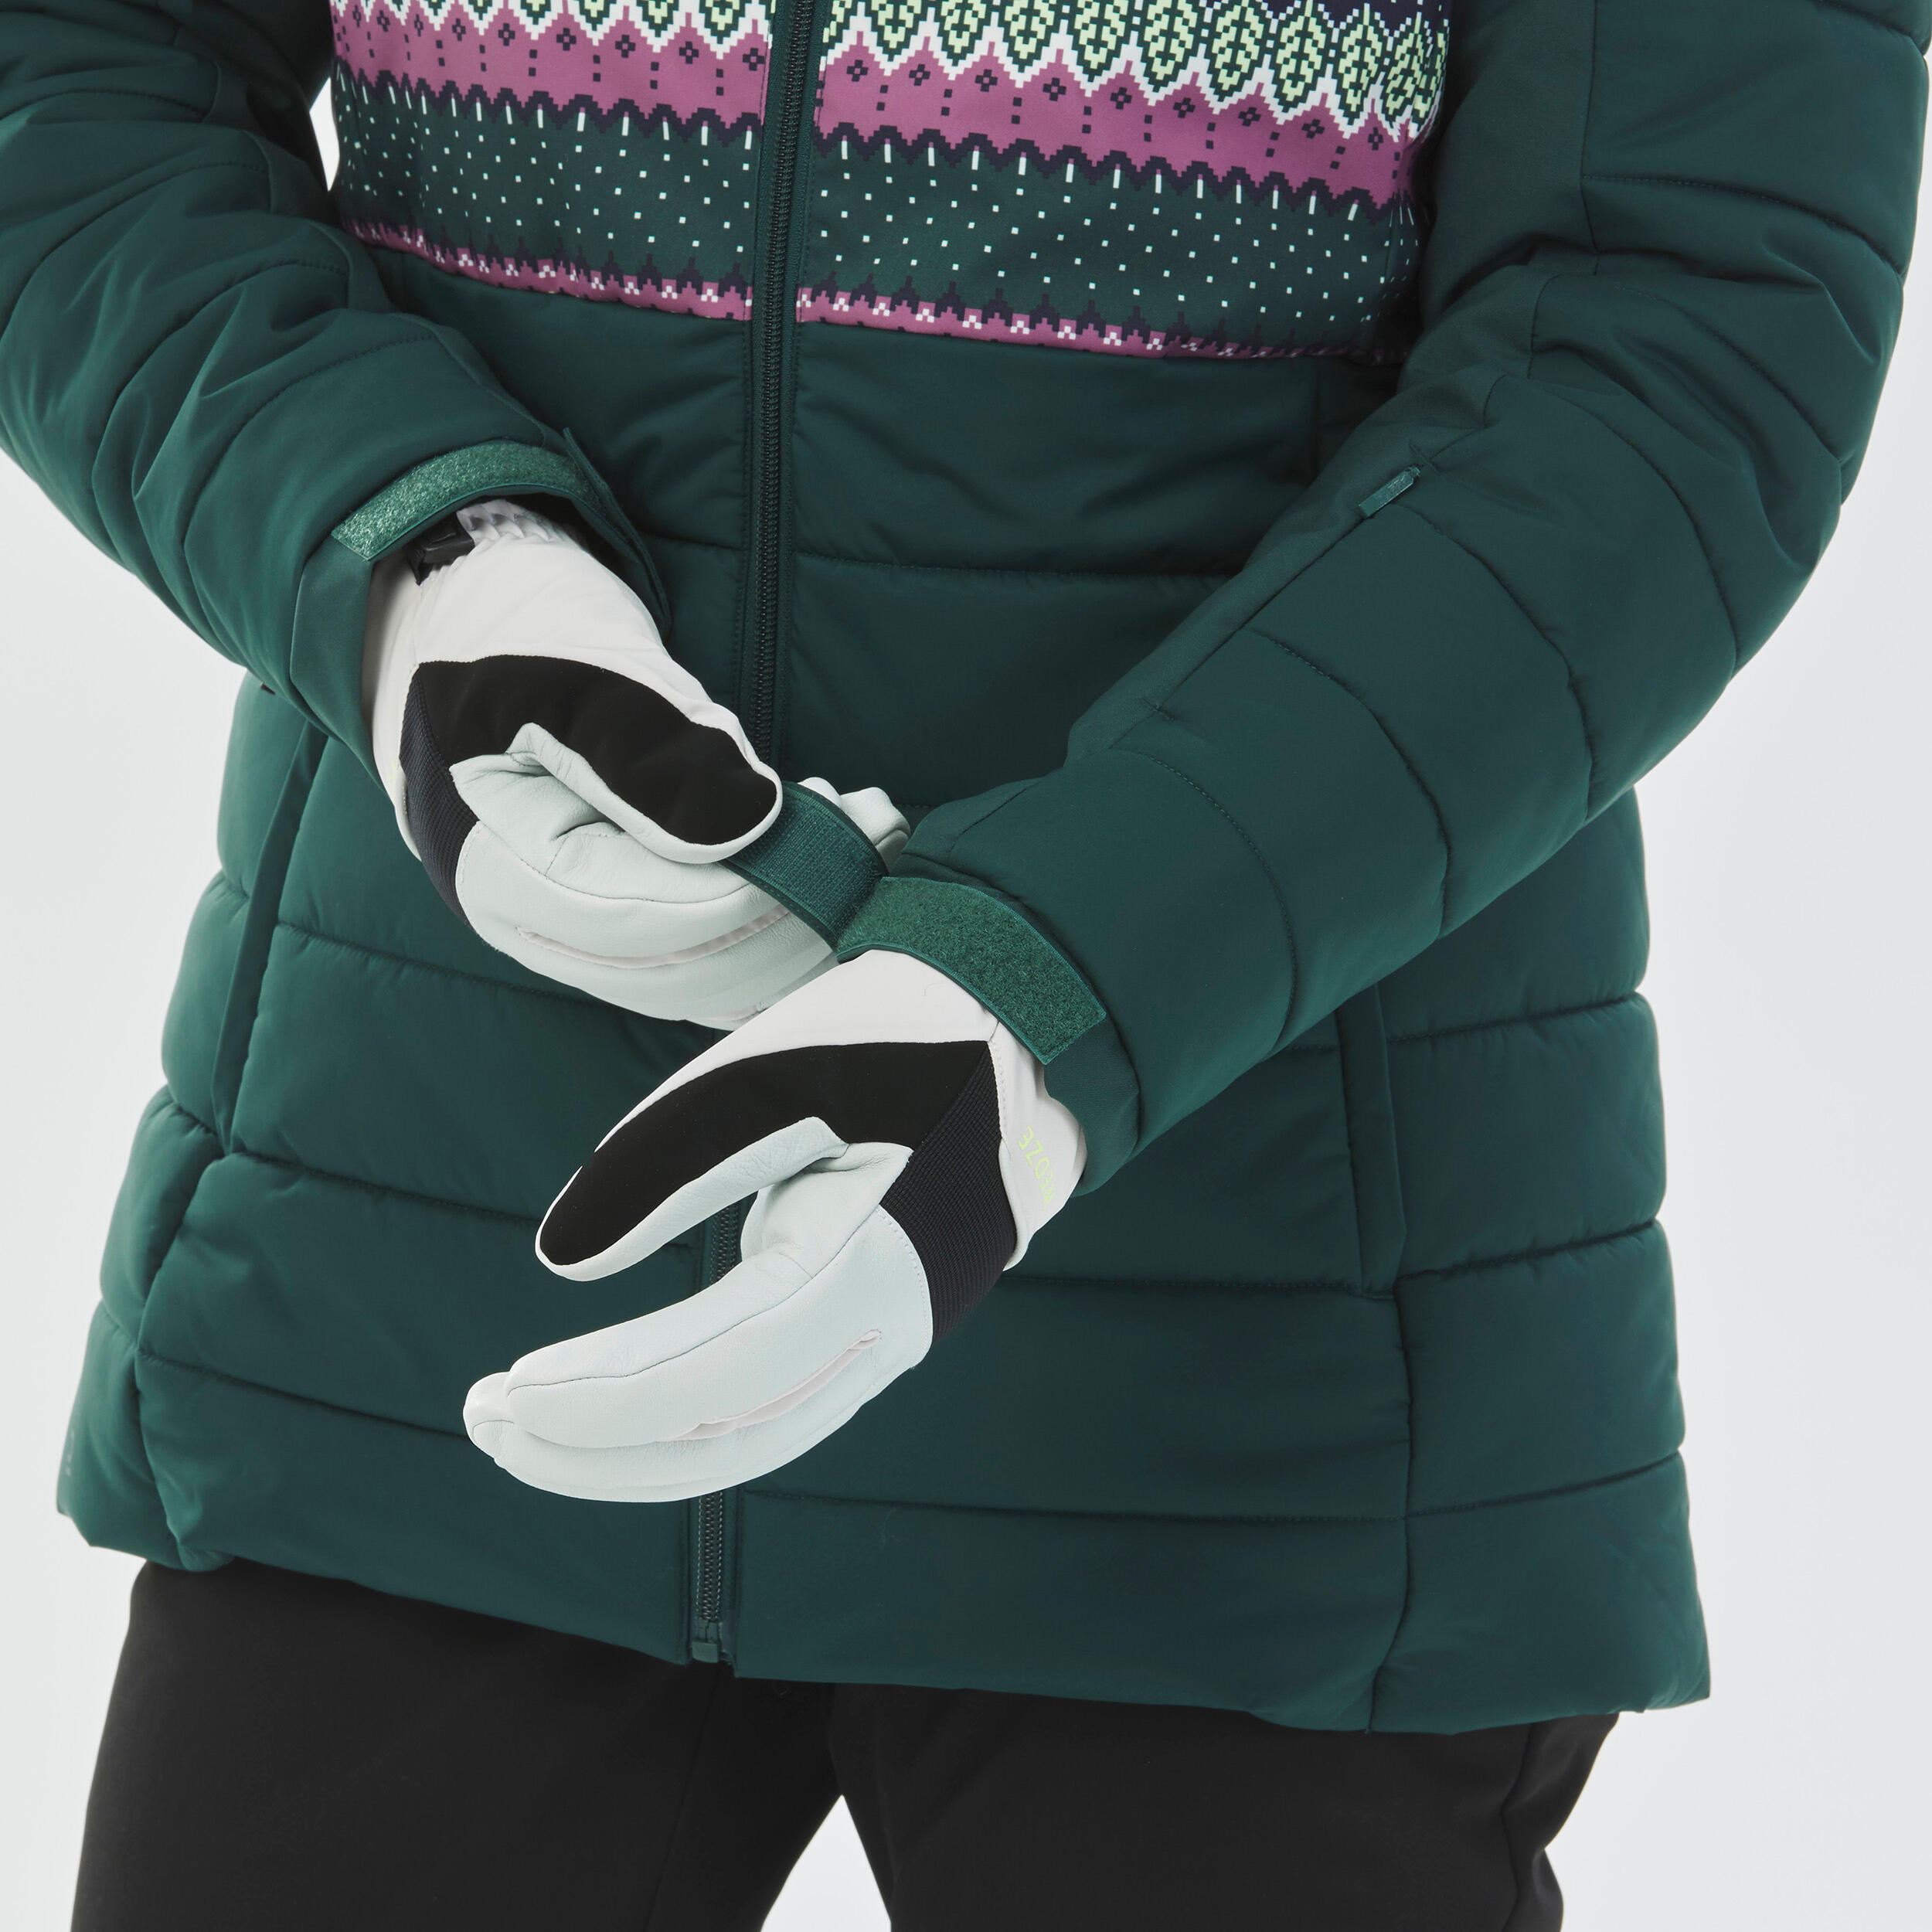 Women's Mid-Length Warm Ski Jacket - 100 Patterned 10/12